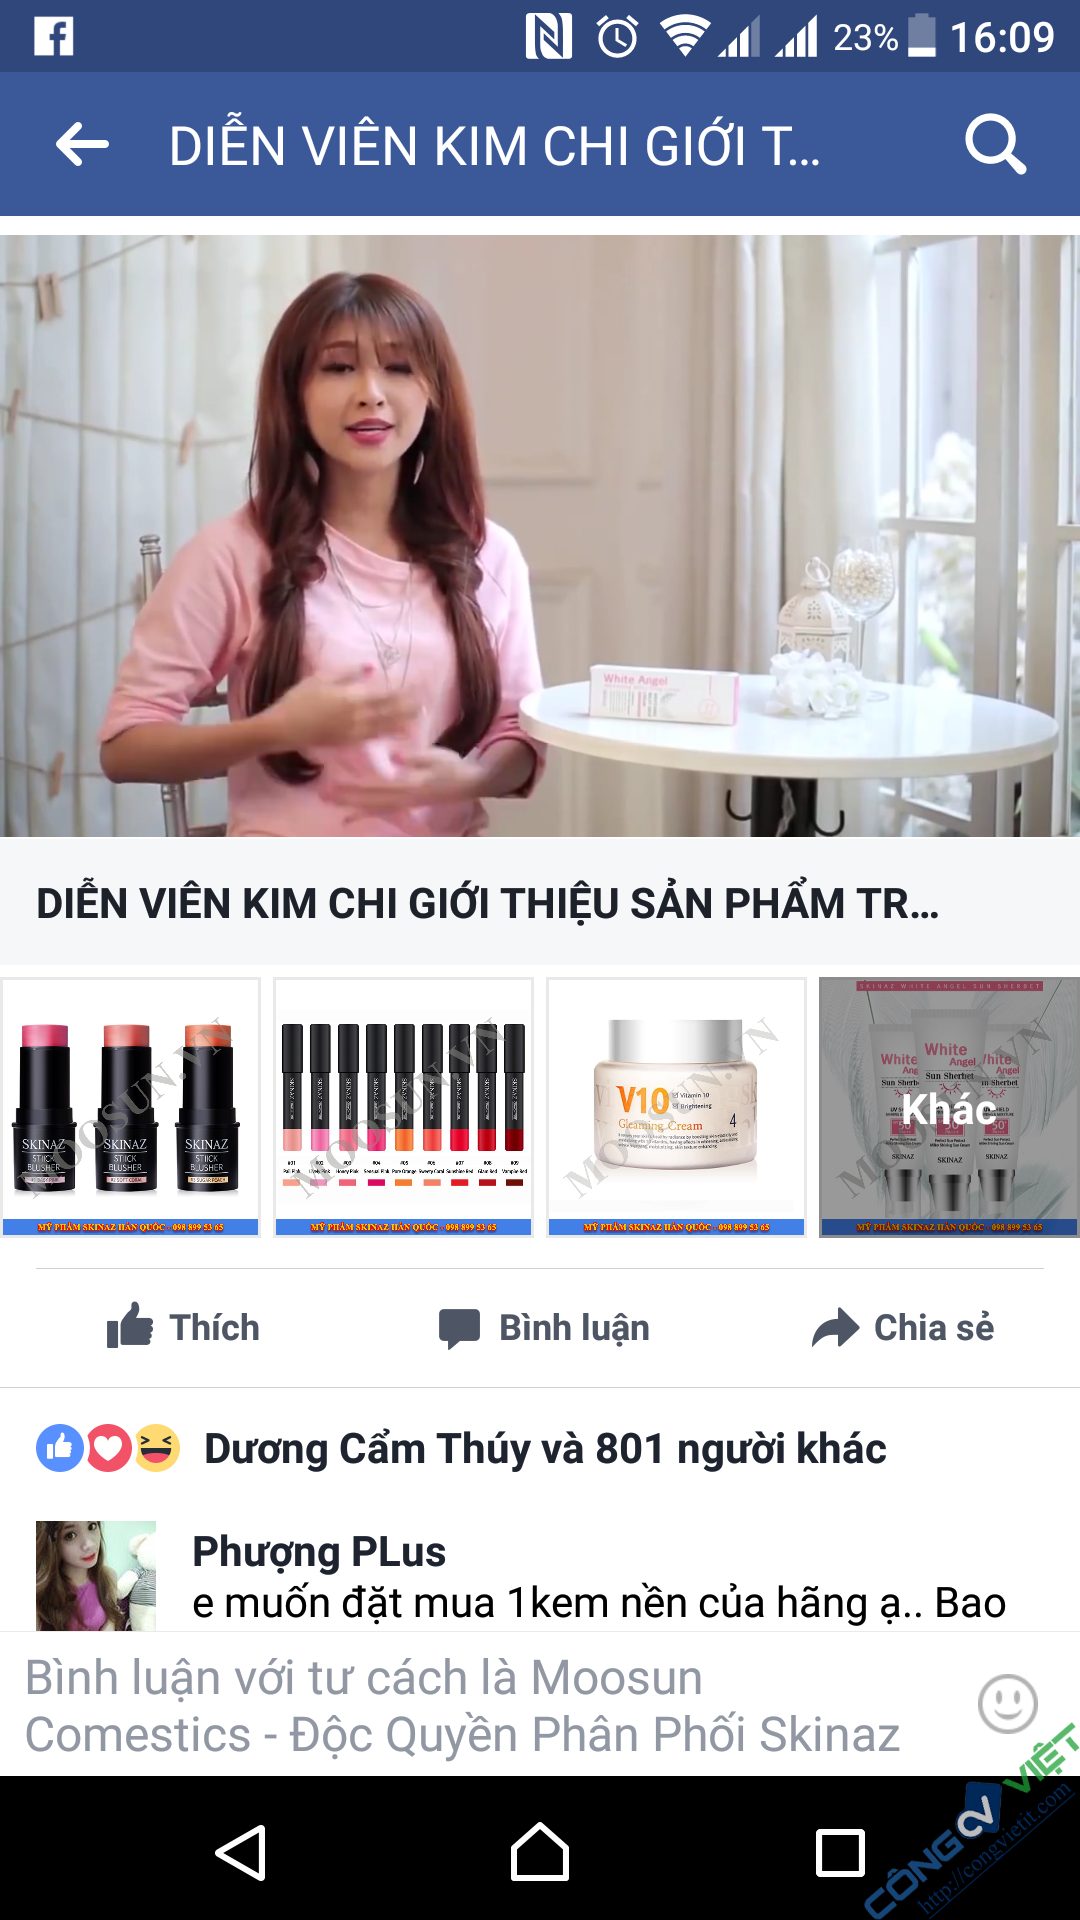 huong-dan-tao-quang-cao-facebook-ads-danh-muc-san-pham